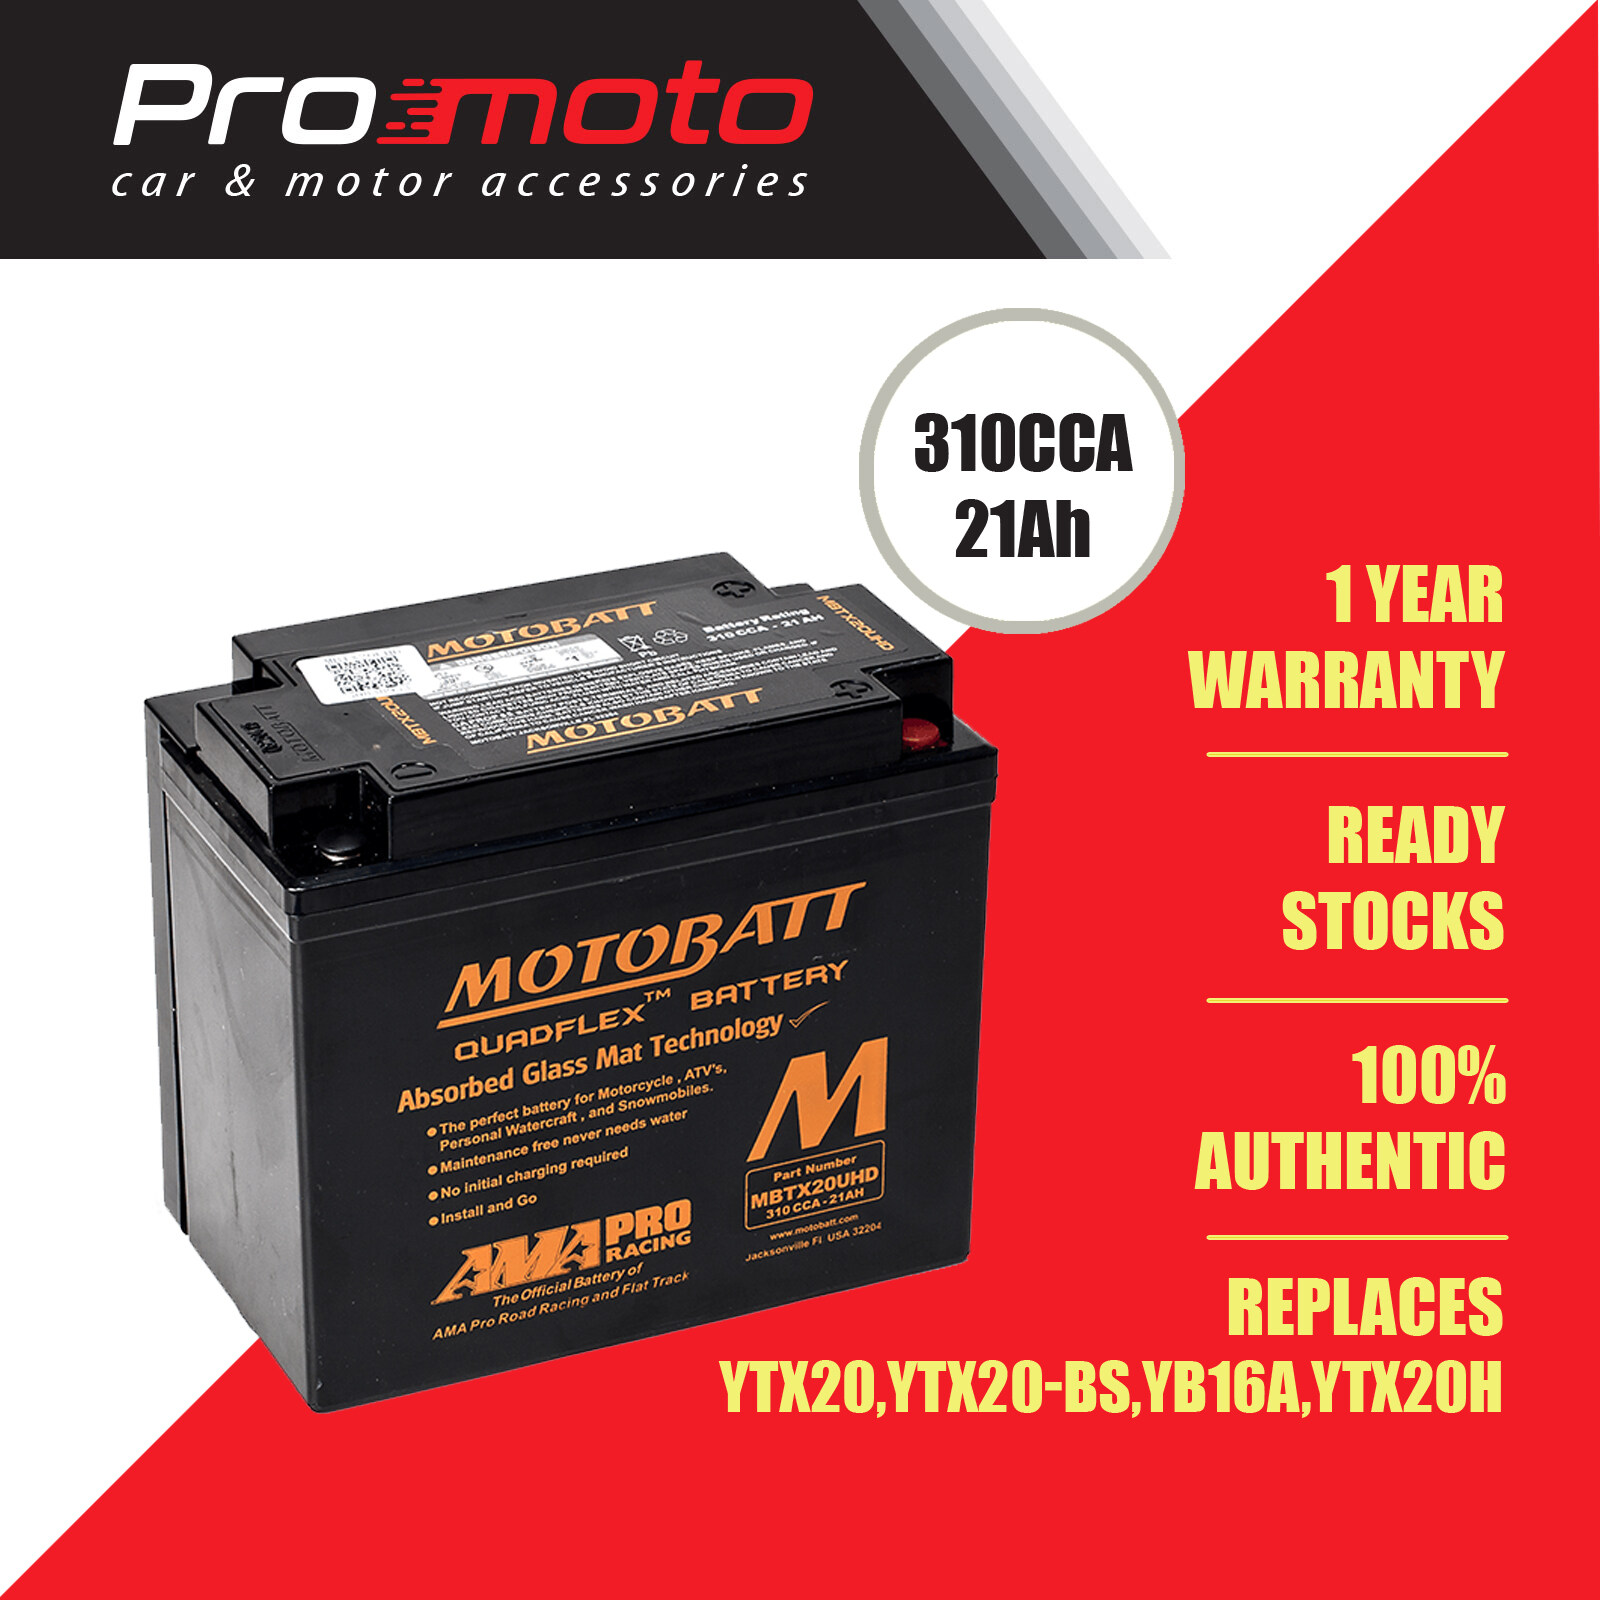 Motobatt Quadflex Battery MBTX20UHD (FOR HARLEY-DAVIDSON) (Replaces YTX20, YTX20-BS, YB16A, YTX20H)